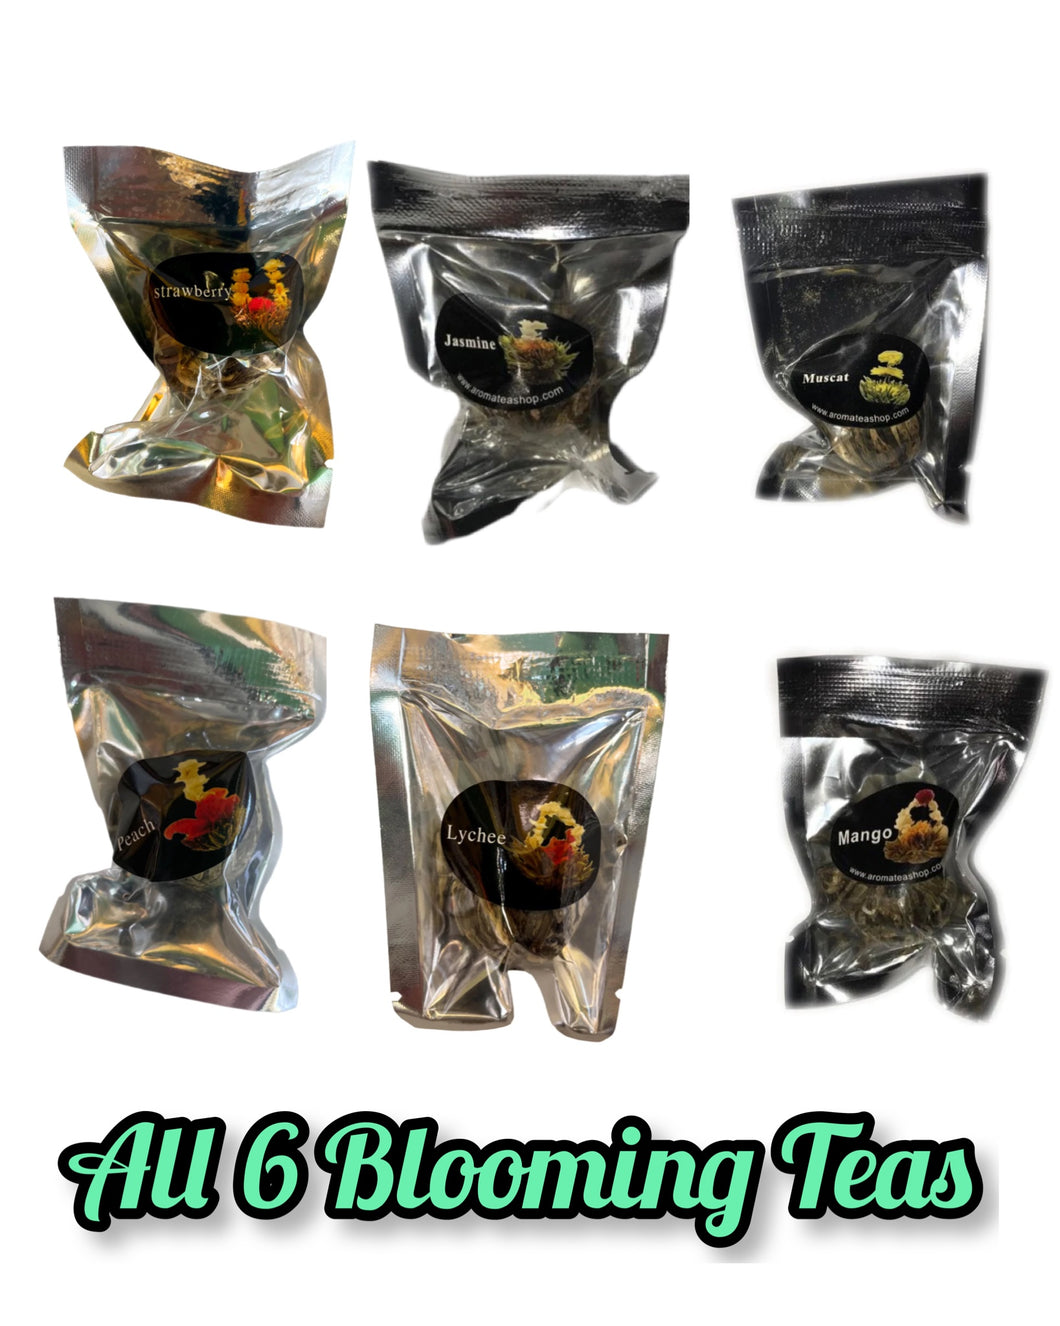 All 6 Blooming Teas